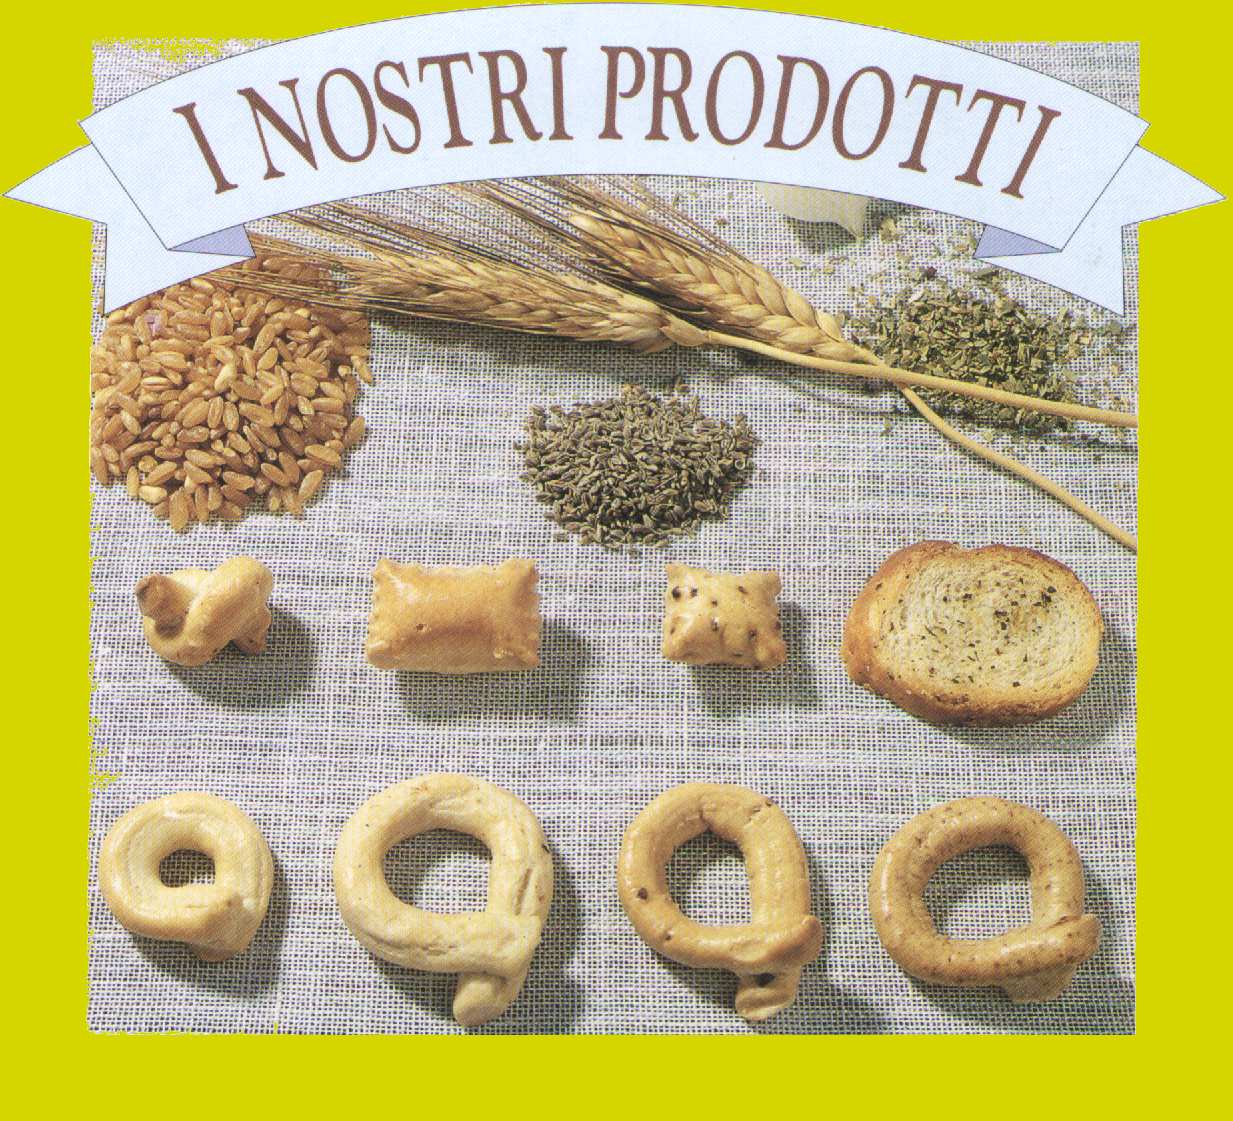 Clicca per vedere i Nostri Proodotti/Click here to enter in the Quattroemme's  web site